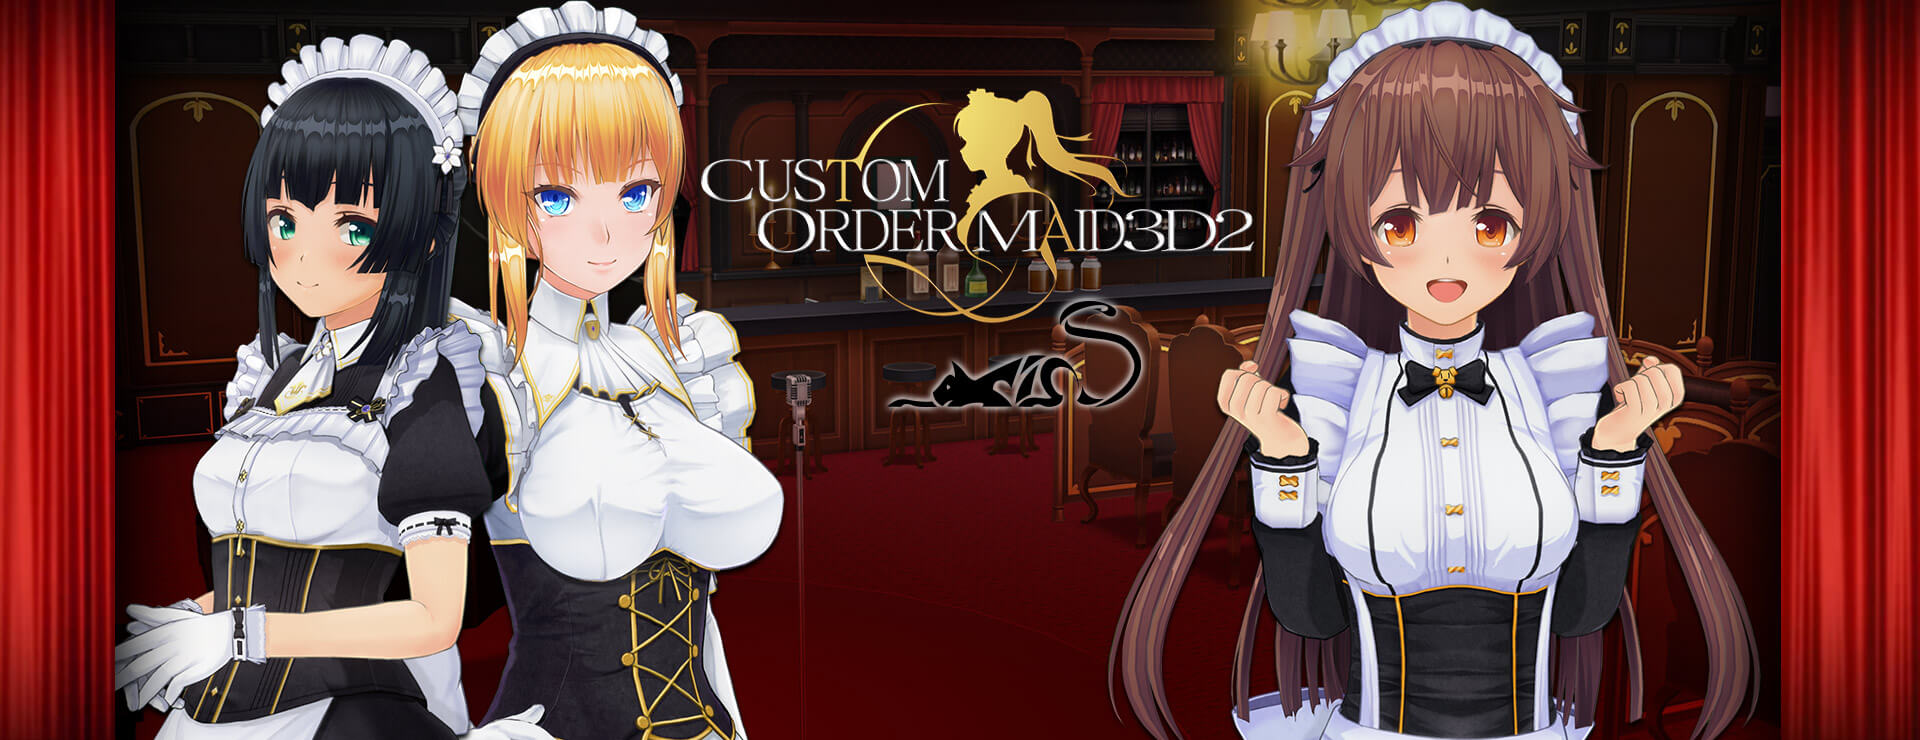 Custom Order Maid 3D2 GP 01 (DLC) - Action Adventure Spiel